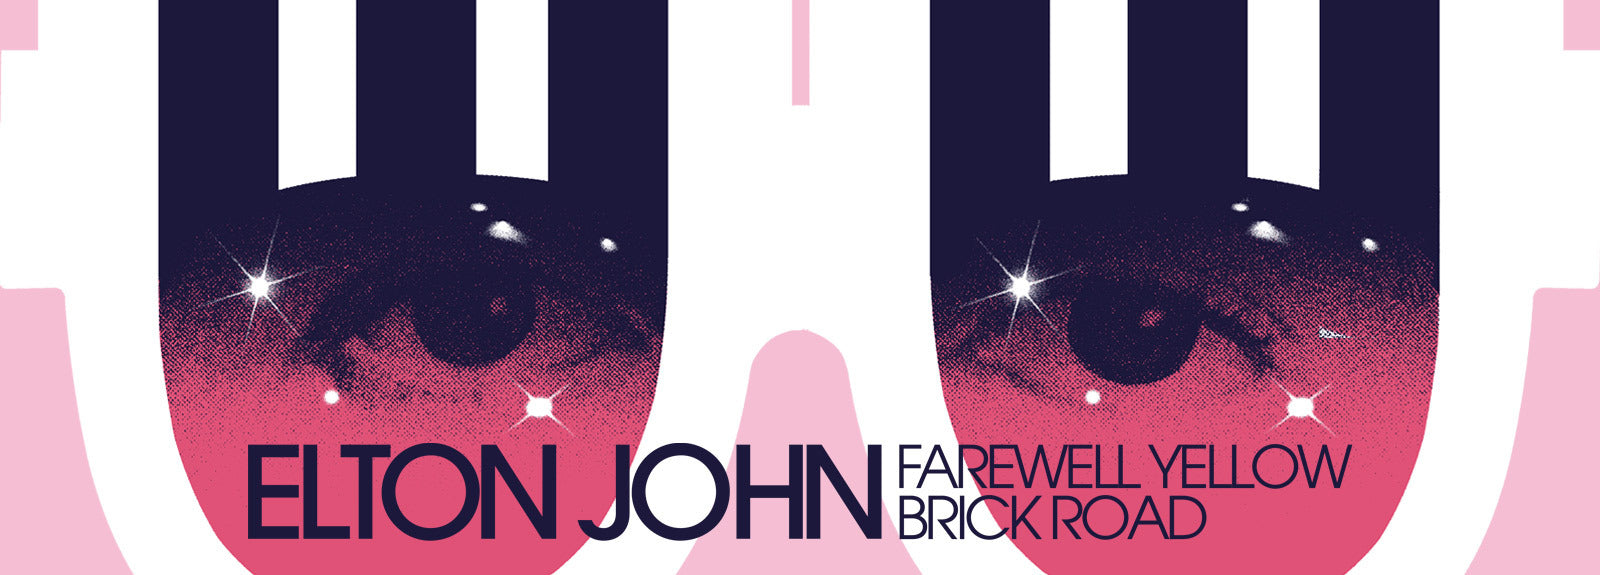 Elton John Farewell Yellow Brick Road New York